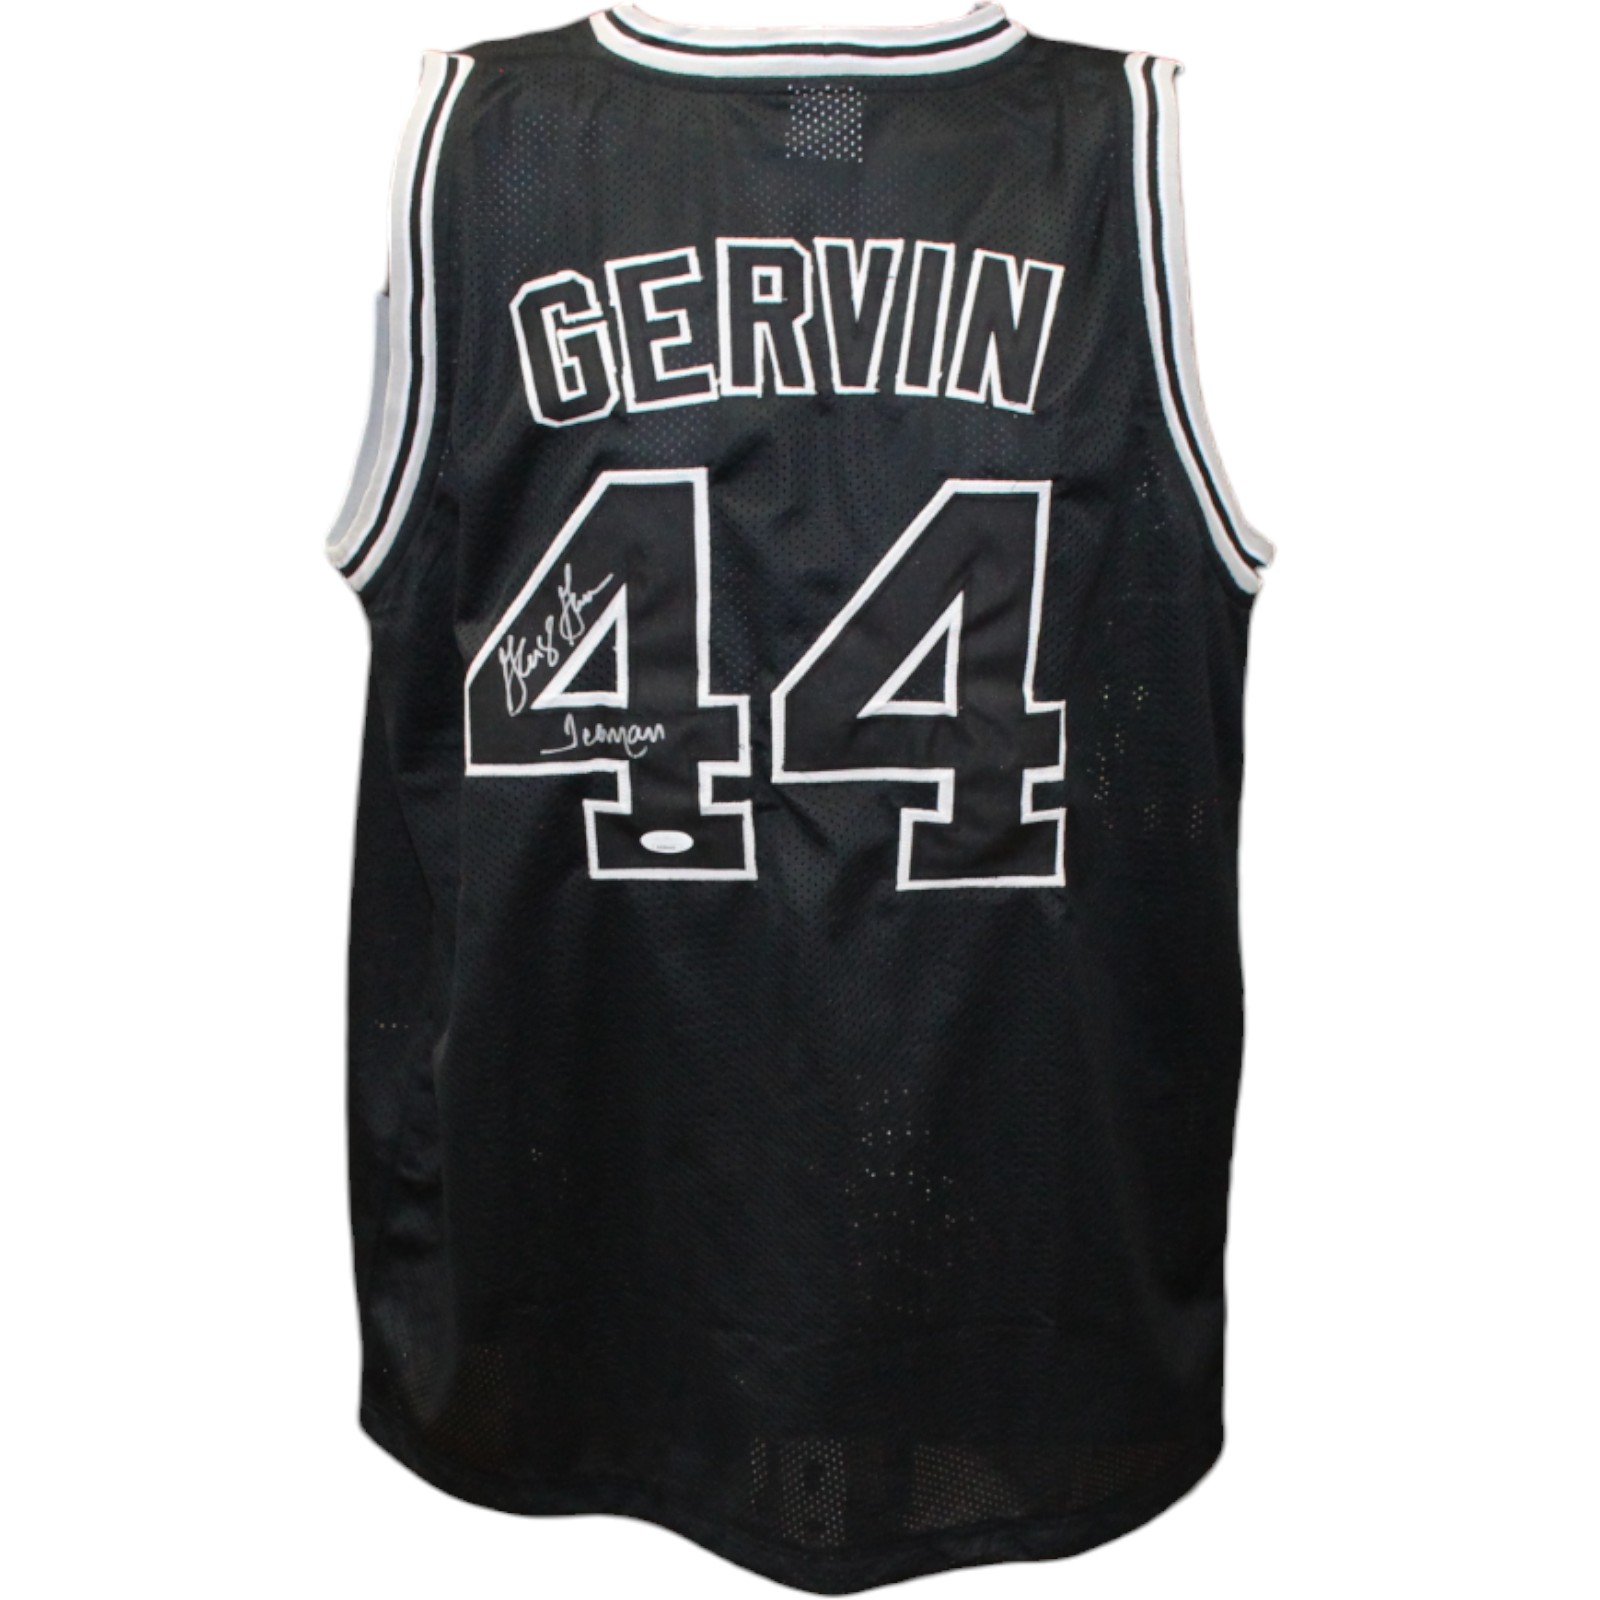 George Gervin Autographed/Signed Pro Style Black Jersey JSA